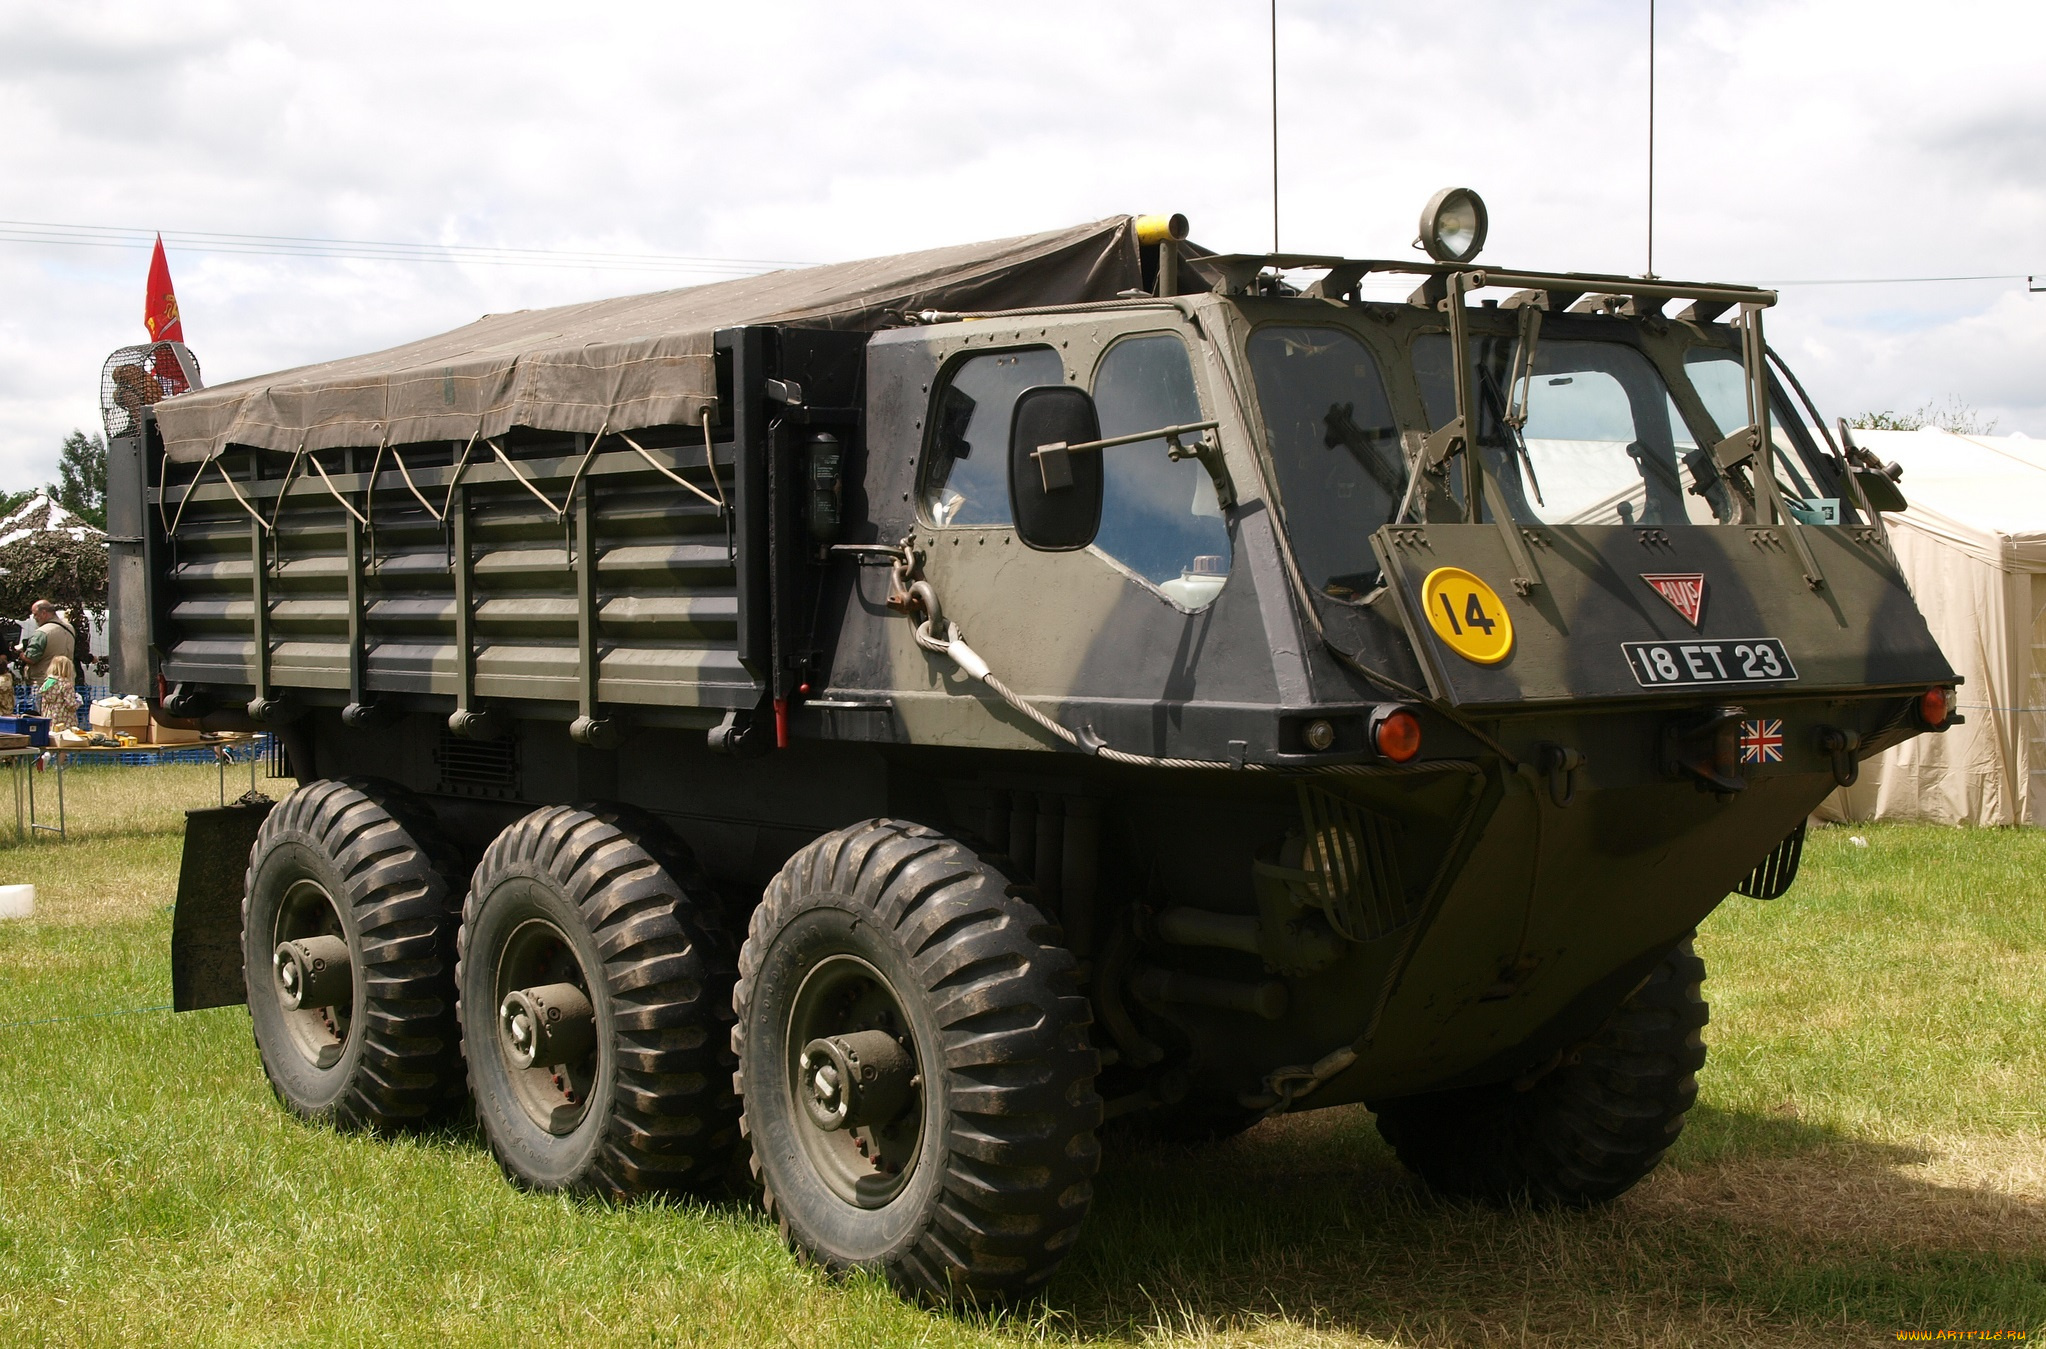 stalwart, fv620, amphibious, military, truck, техника, военная, техника, армейский, грузовик